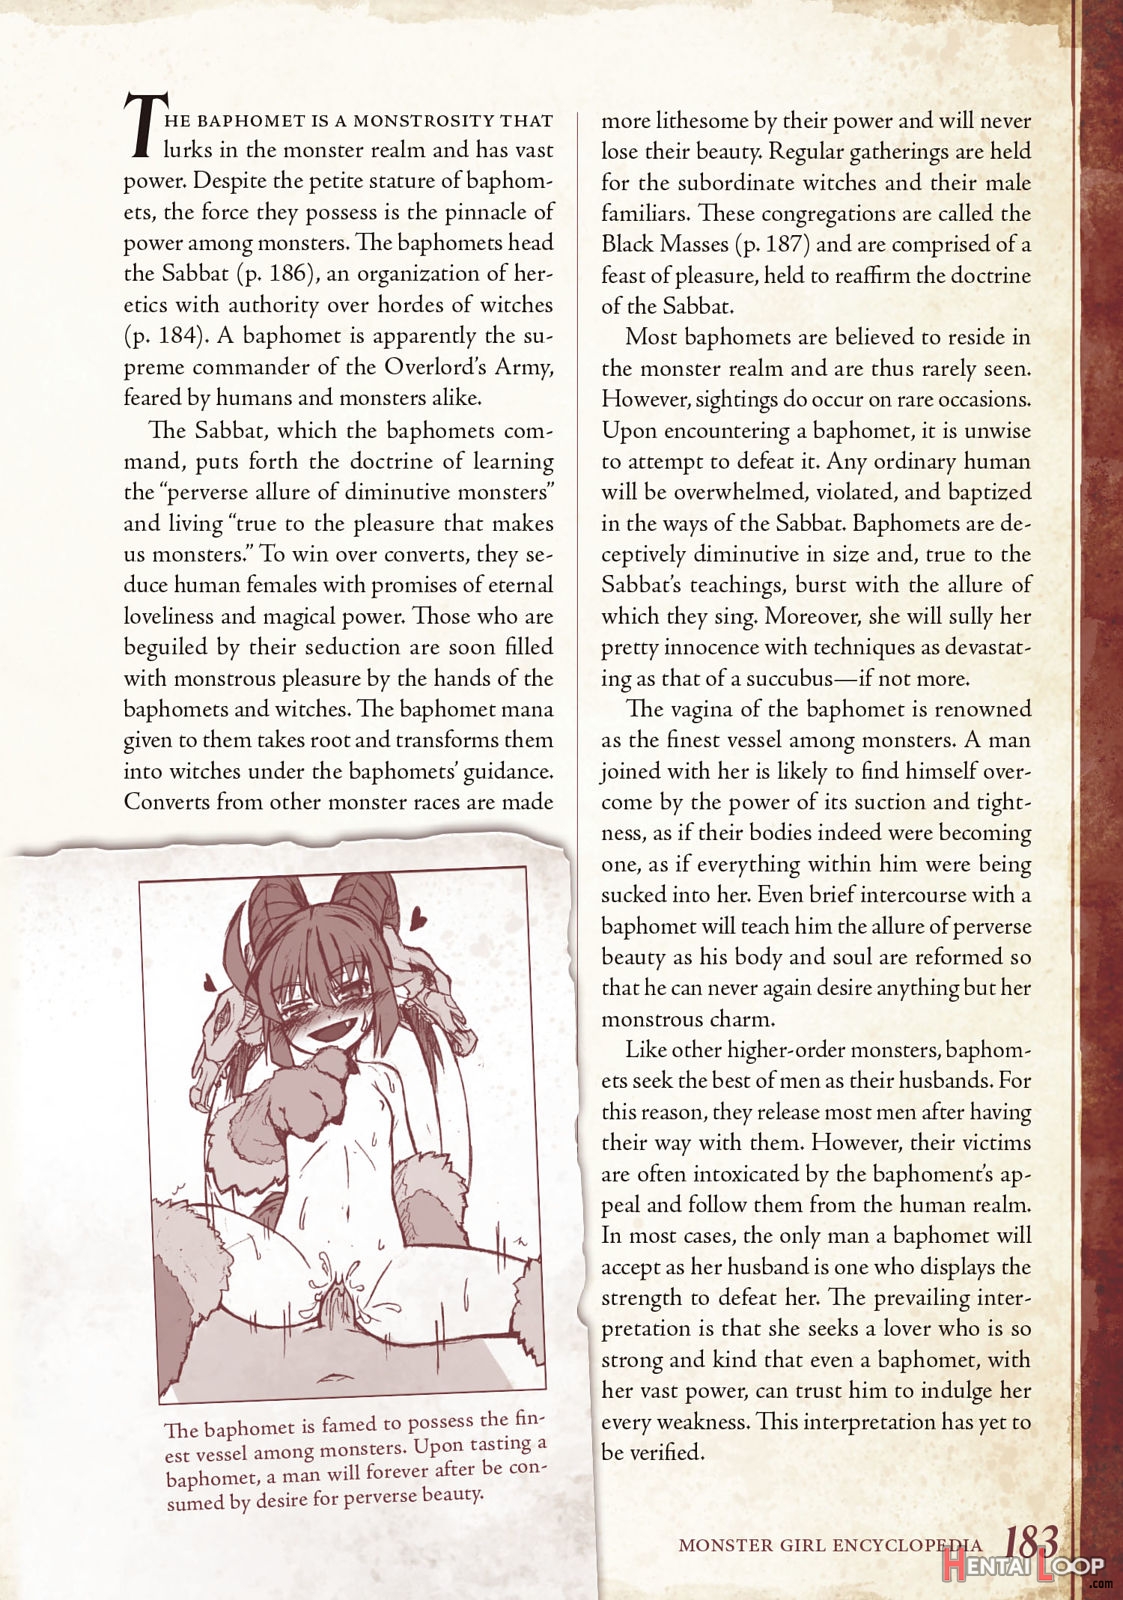 Monster Girl Encyclopedia Vol. 1 page 184